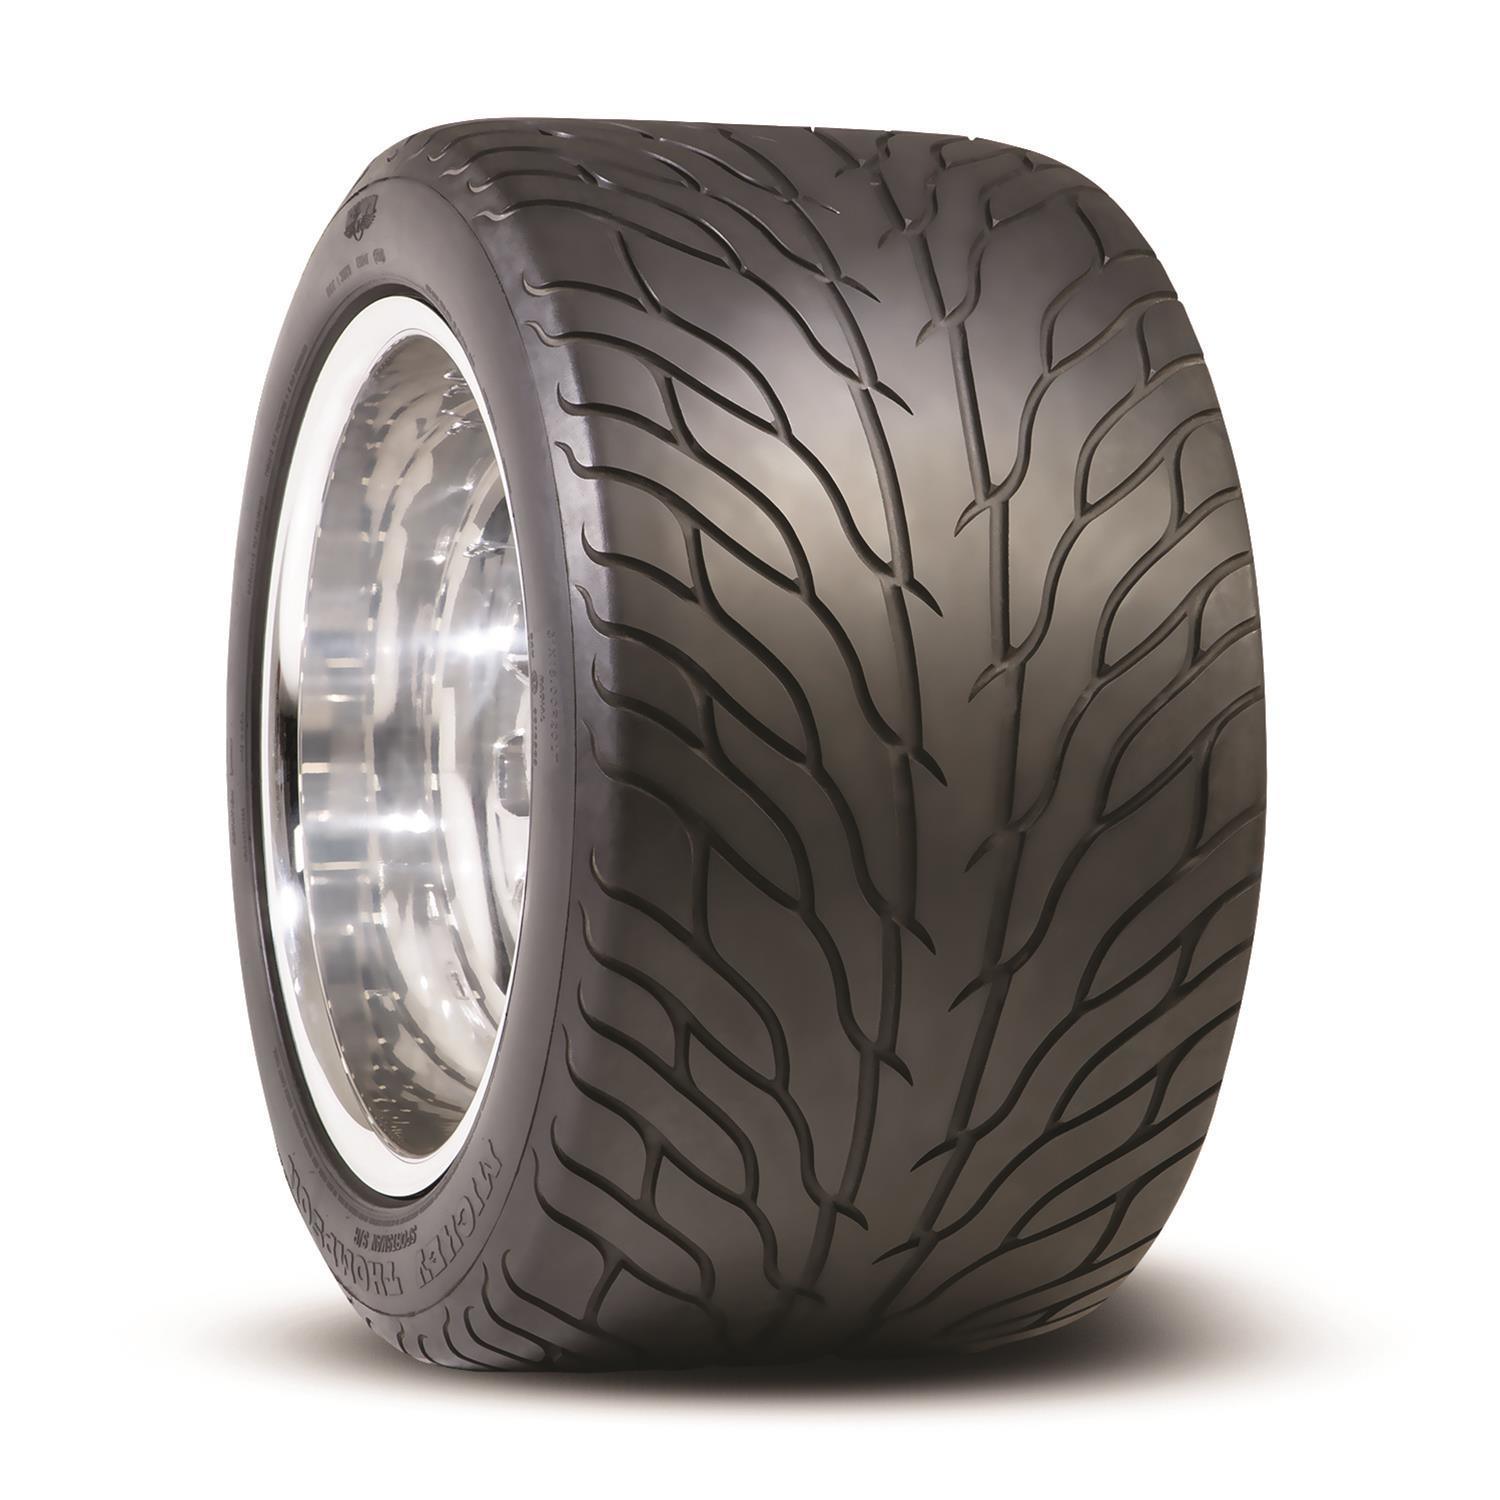 29x15.00R15LT Sportsman S/R Tire - Burlile Performance Products